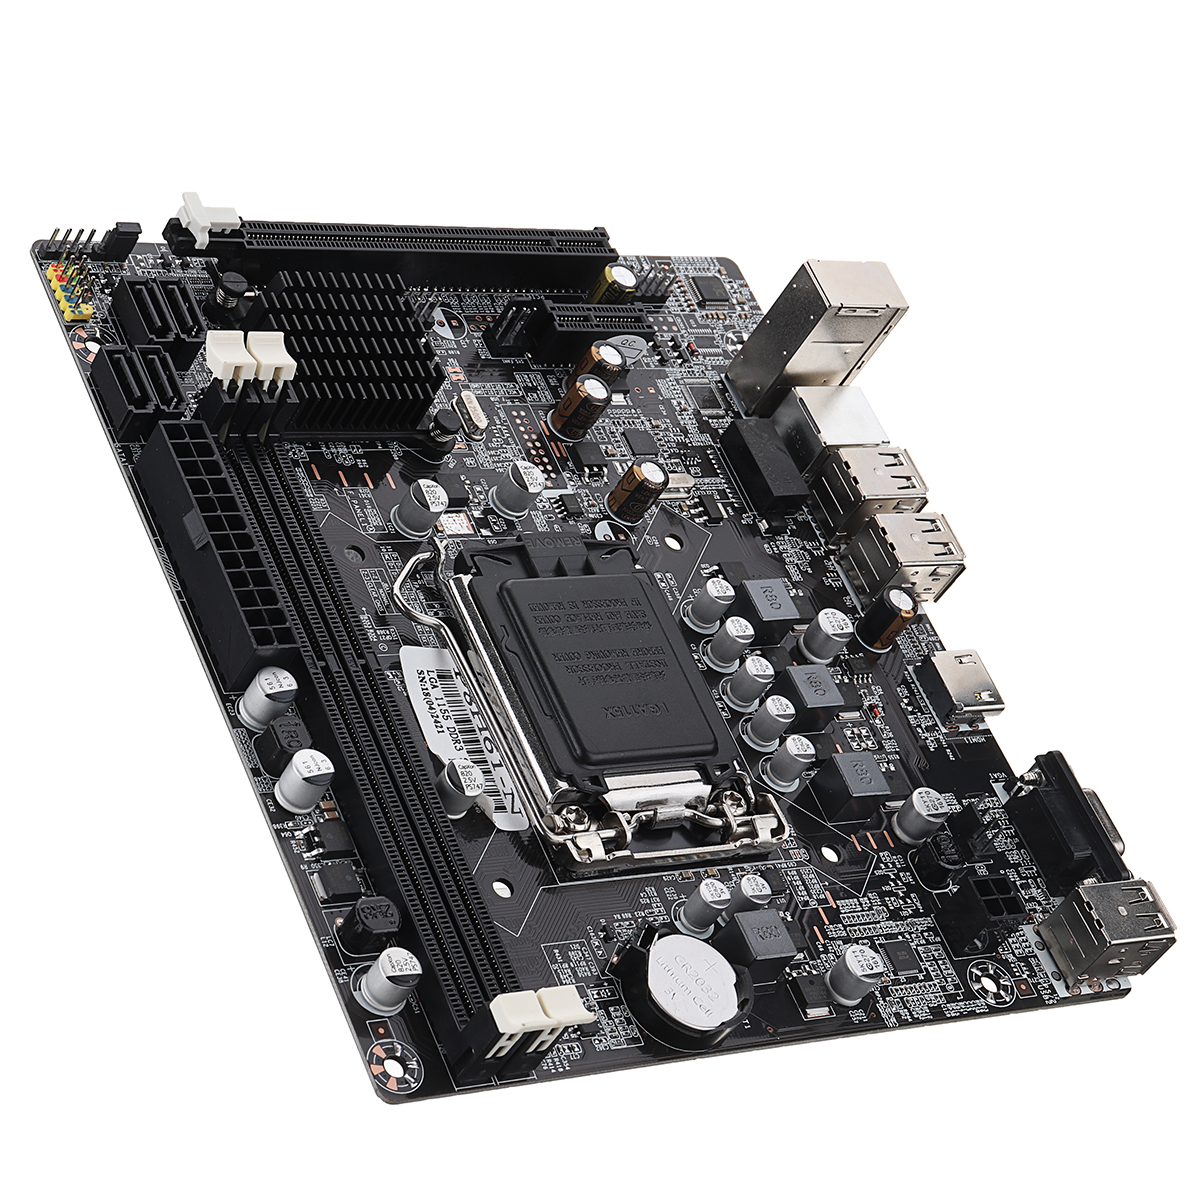 Motherboard & CPU Bundles - New Micro ATX Motherboard Dual DDR3 Slot